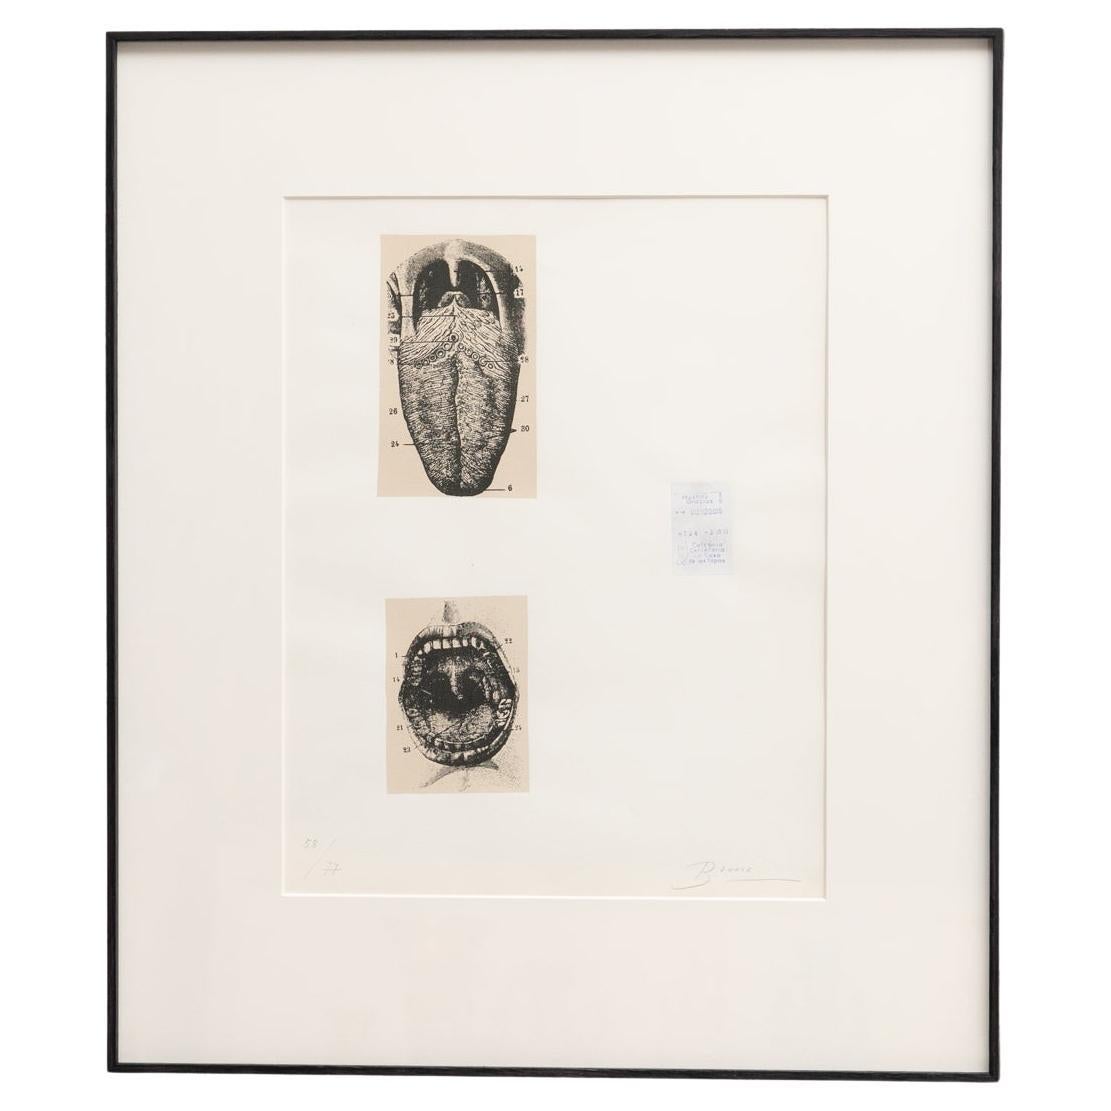 Joan Brossa Framed Lithograph Visual Poem For Sale